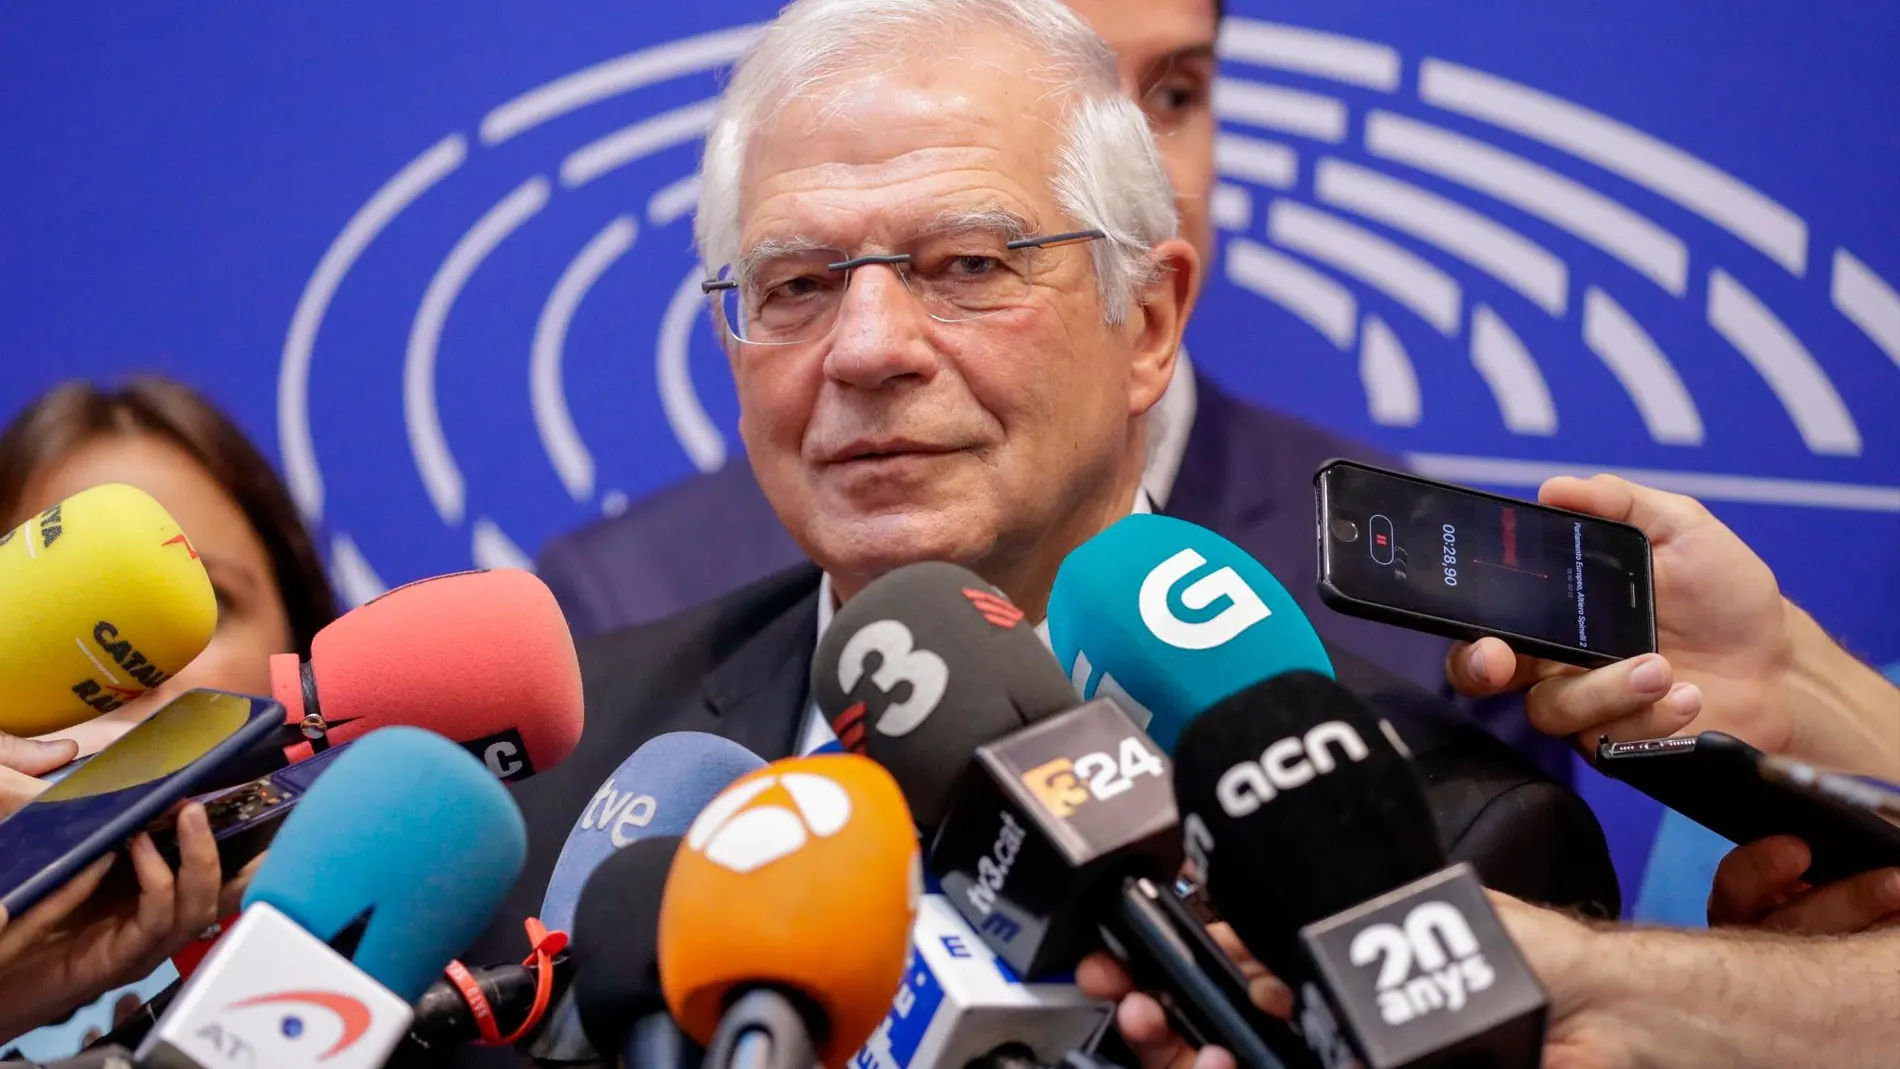 El ministro de Asuntos Exteriores, Josep Borrell, en el Parlamento Europeo. EFE/Stephanie Lecocq